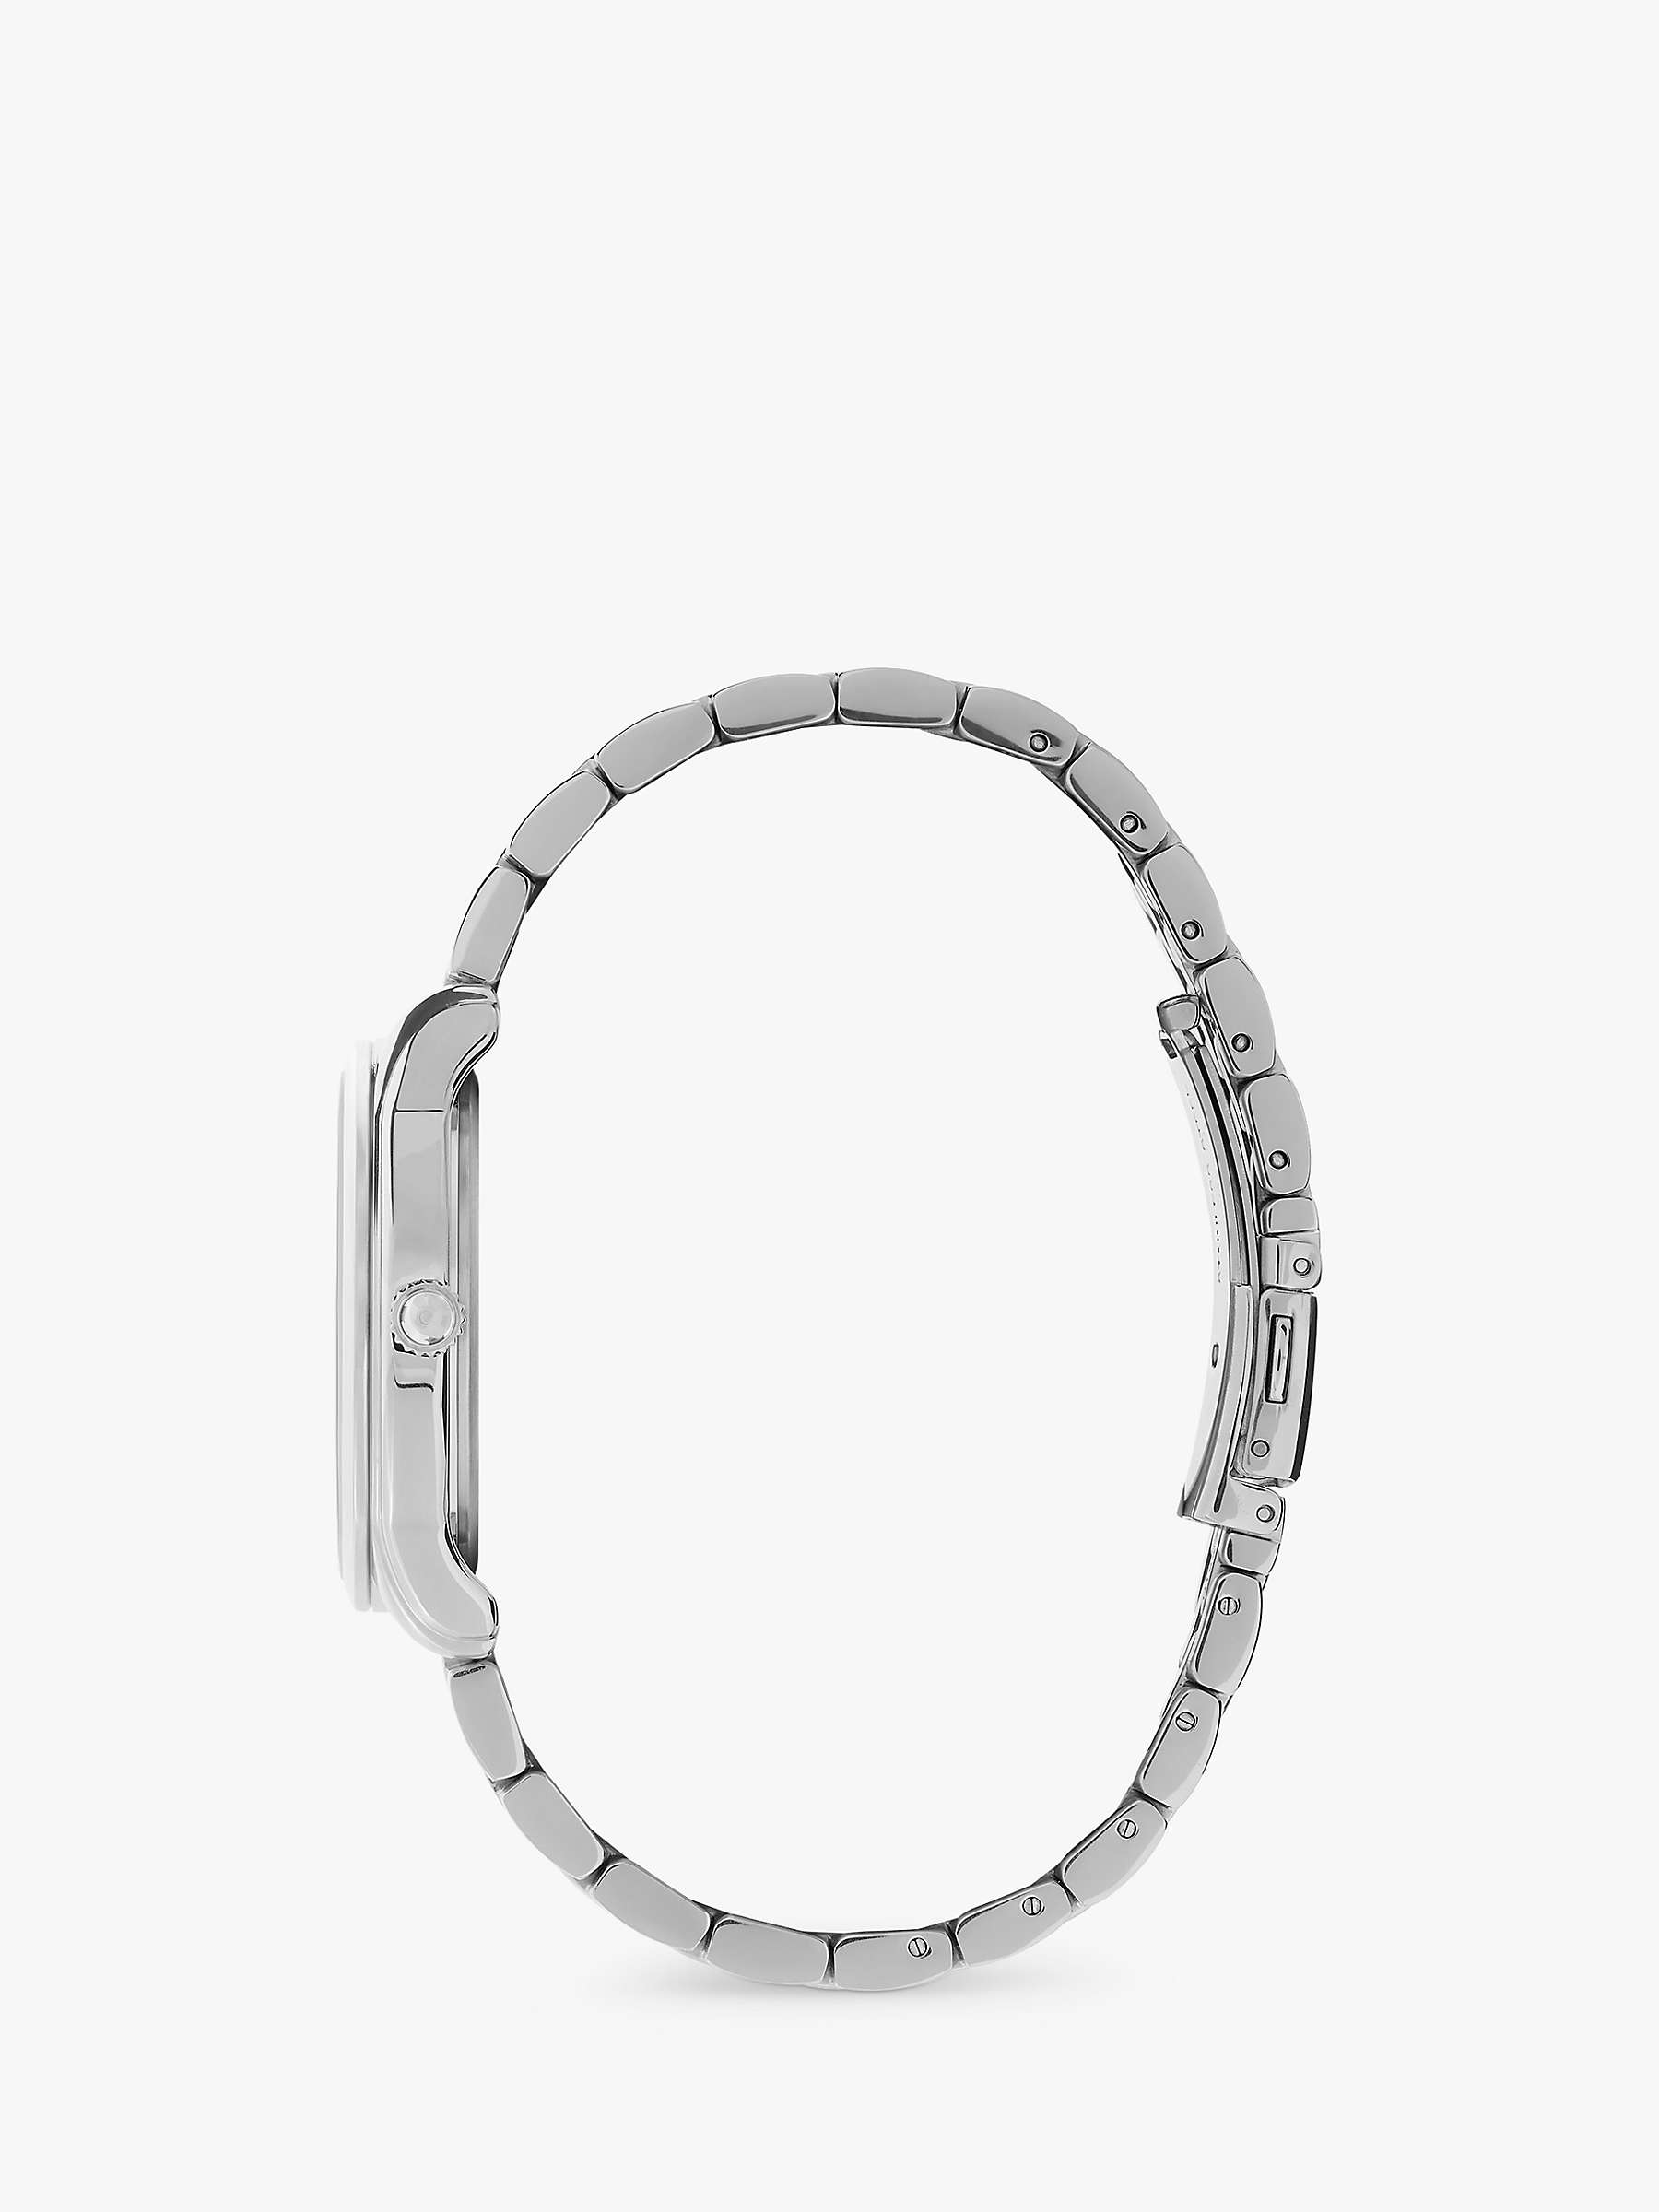 Buy Olivia Burton Women's Starlight Bracelet Strap Watch Online at johnlewis.com